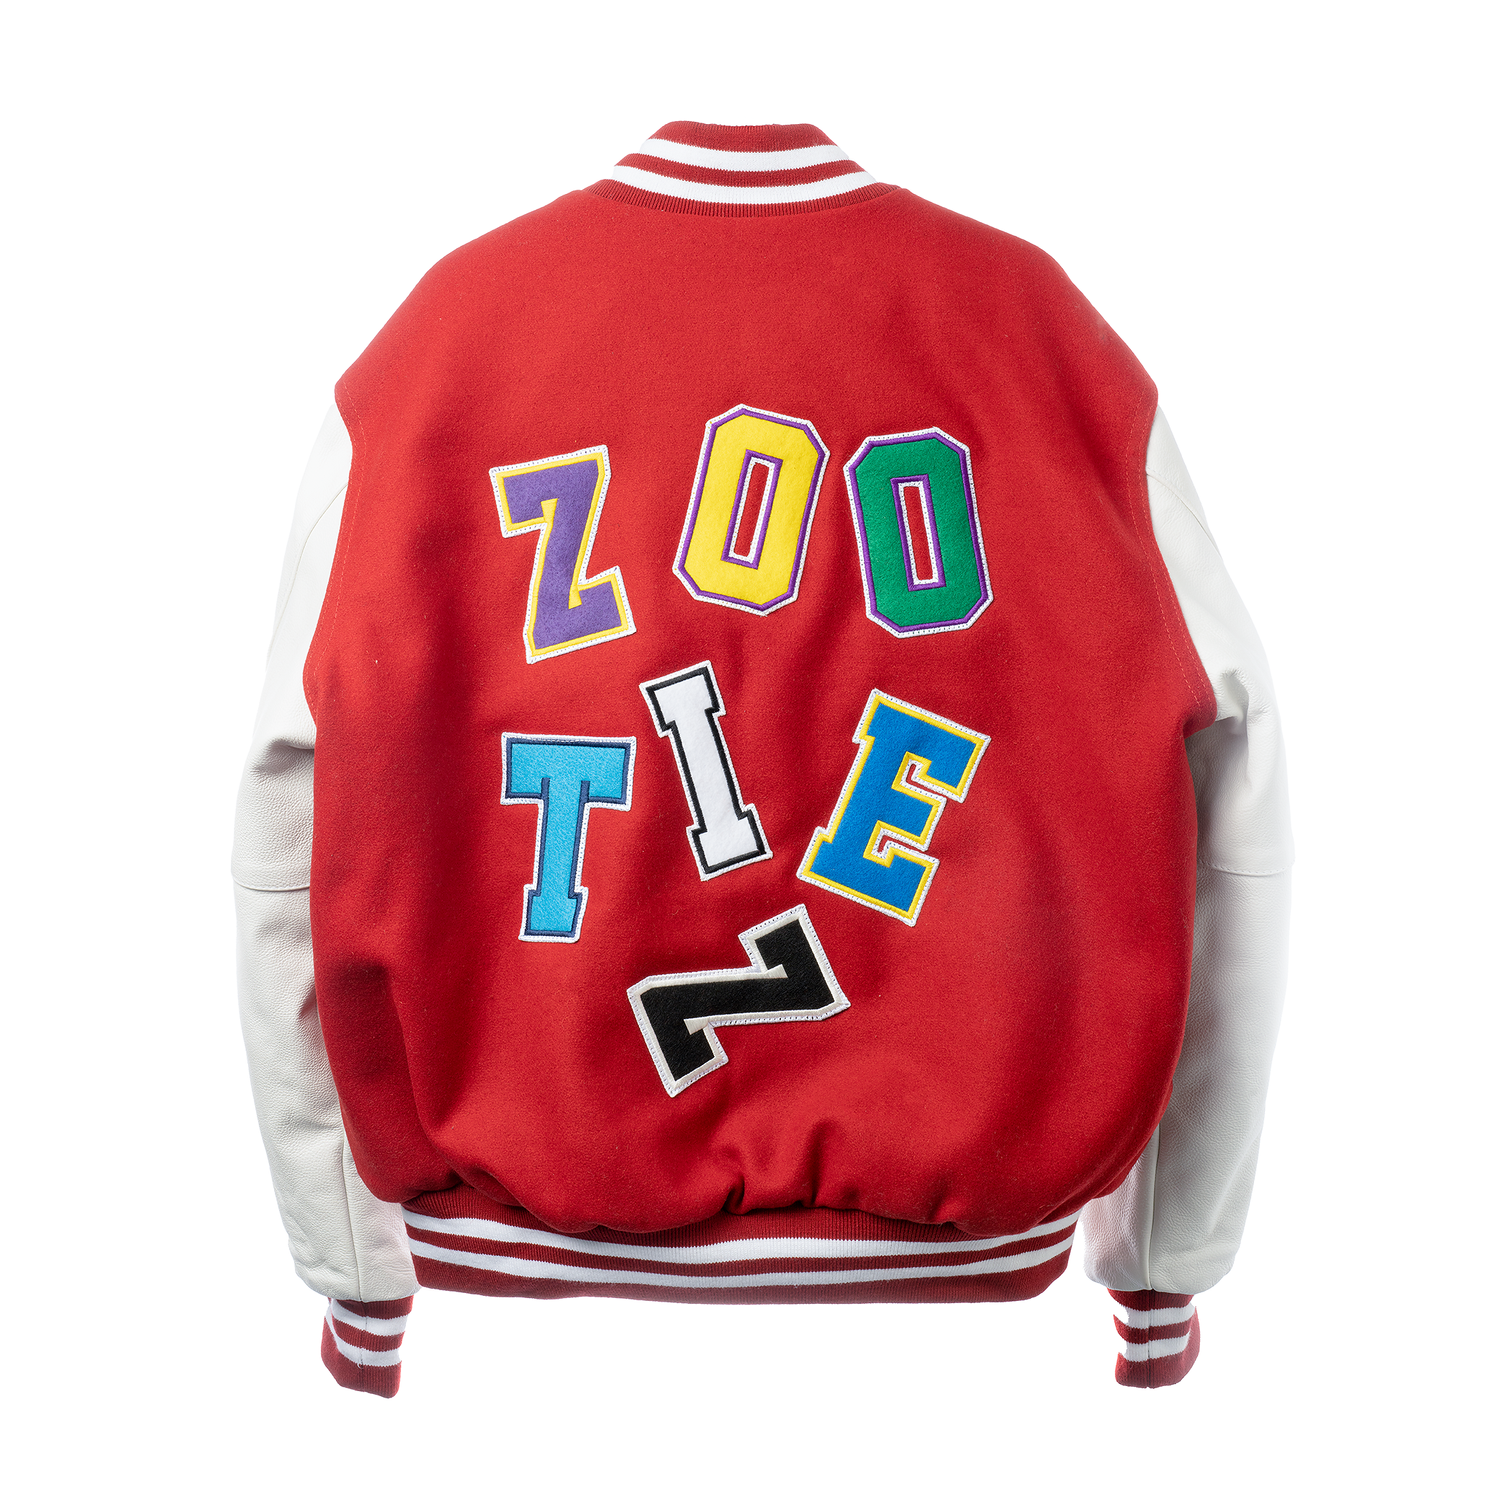 Zinovizo Men's Red Baseball Jacket with Hoodie – zinovizo